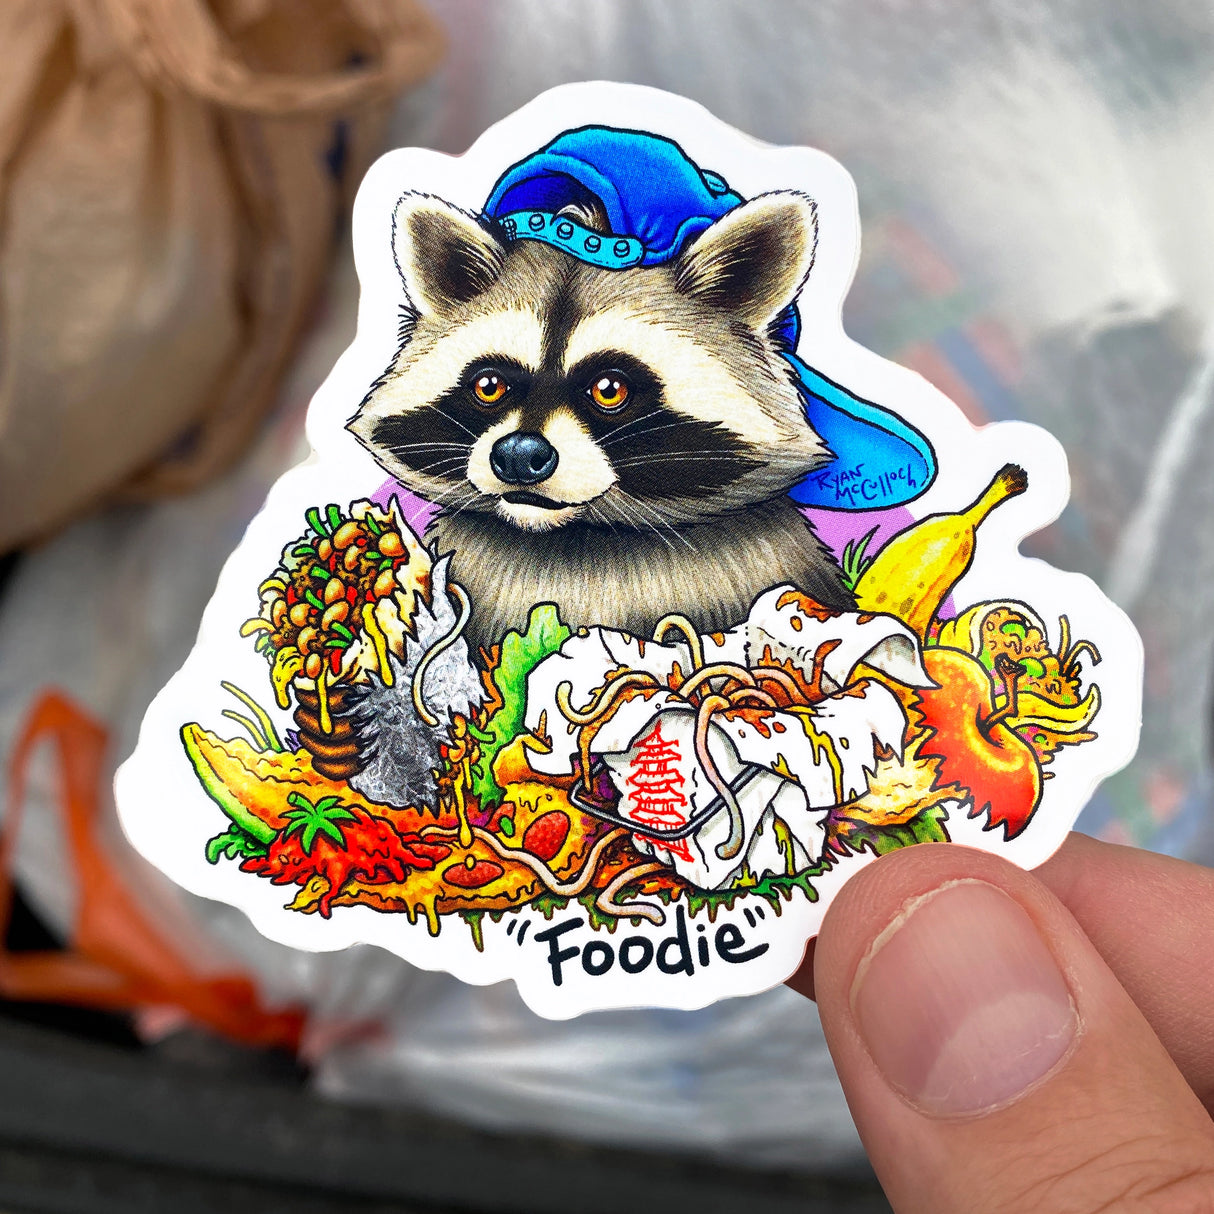 Foodie Raccoon with Garbage Sticker